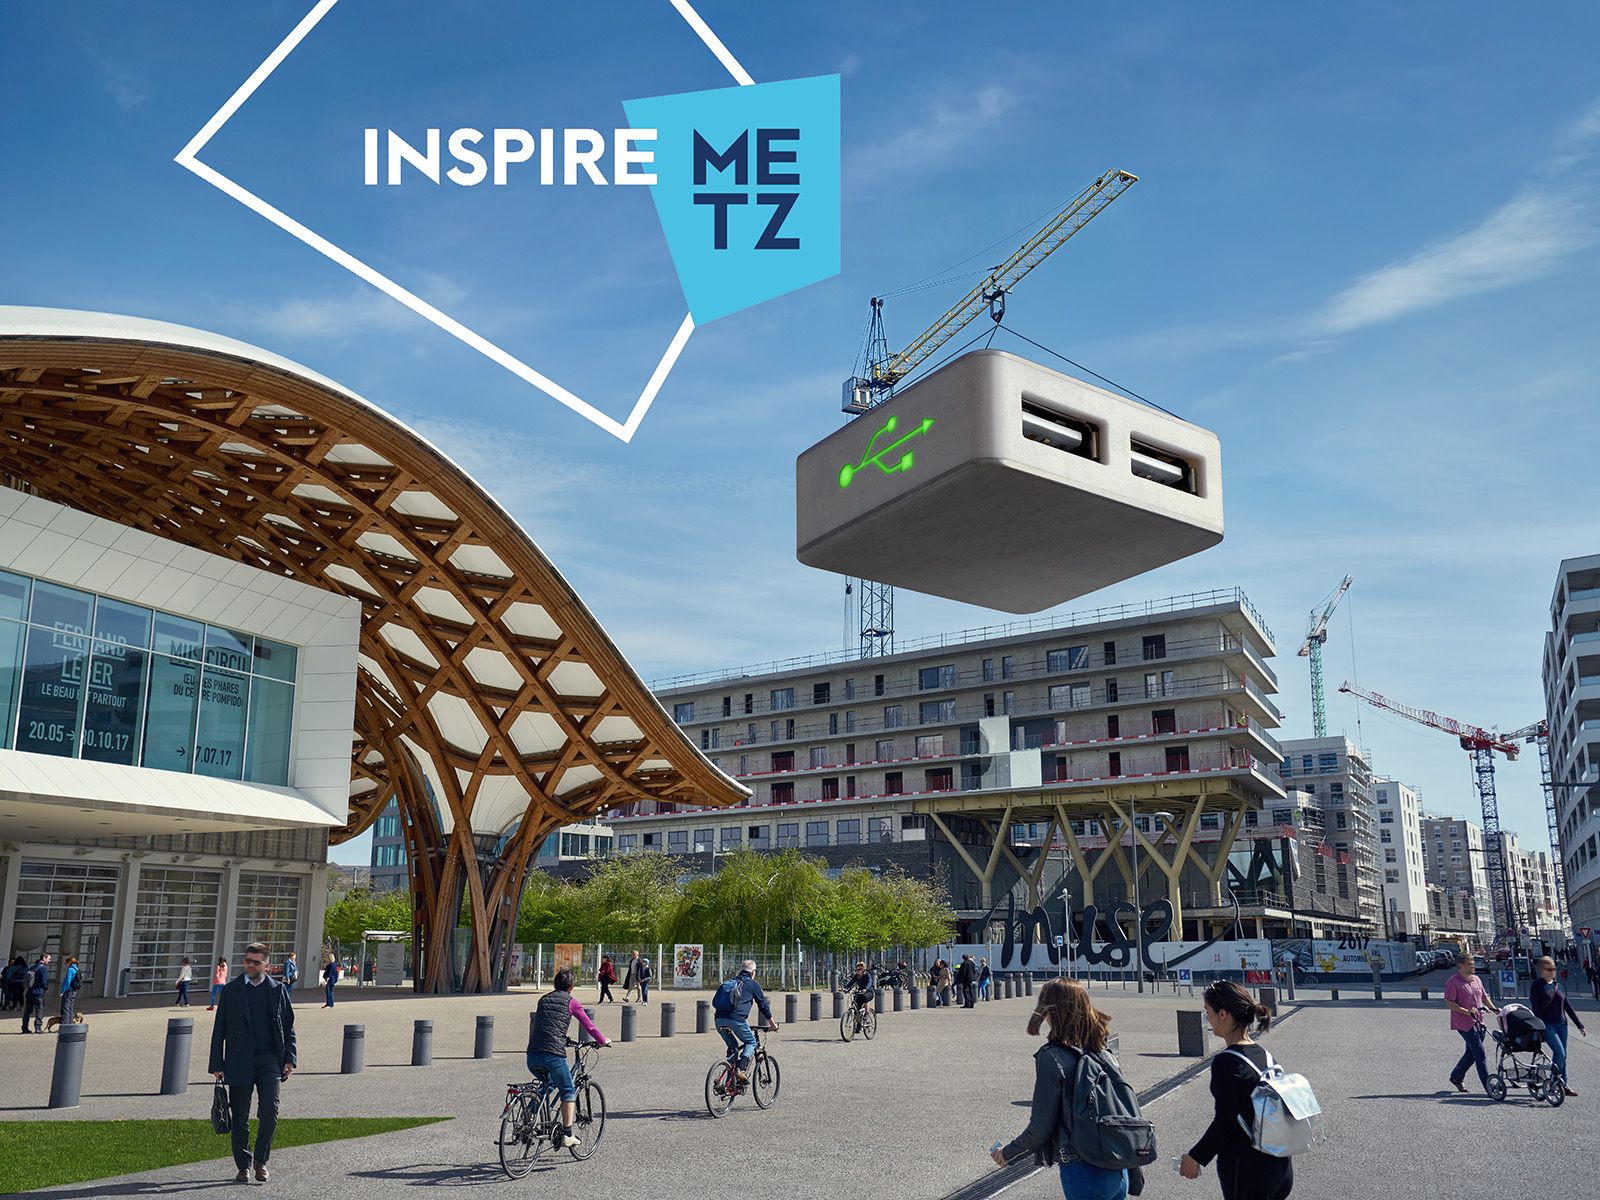 City of Metz (France) - "Inspire Metz" campaign